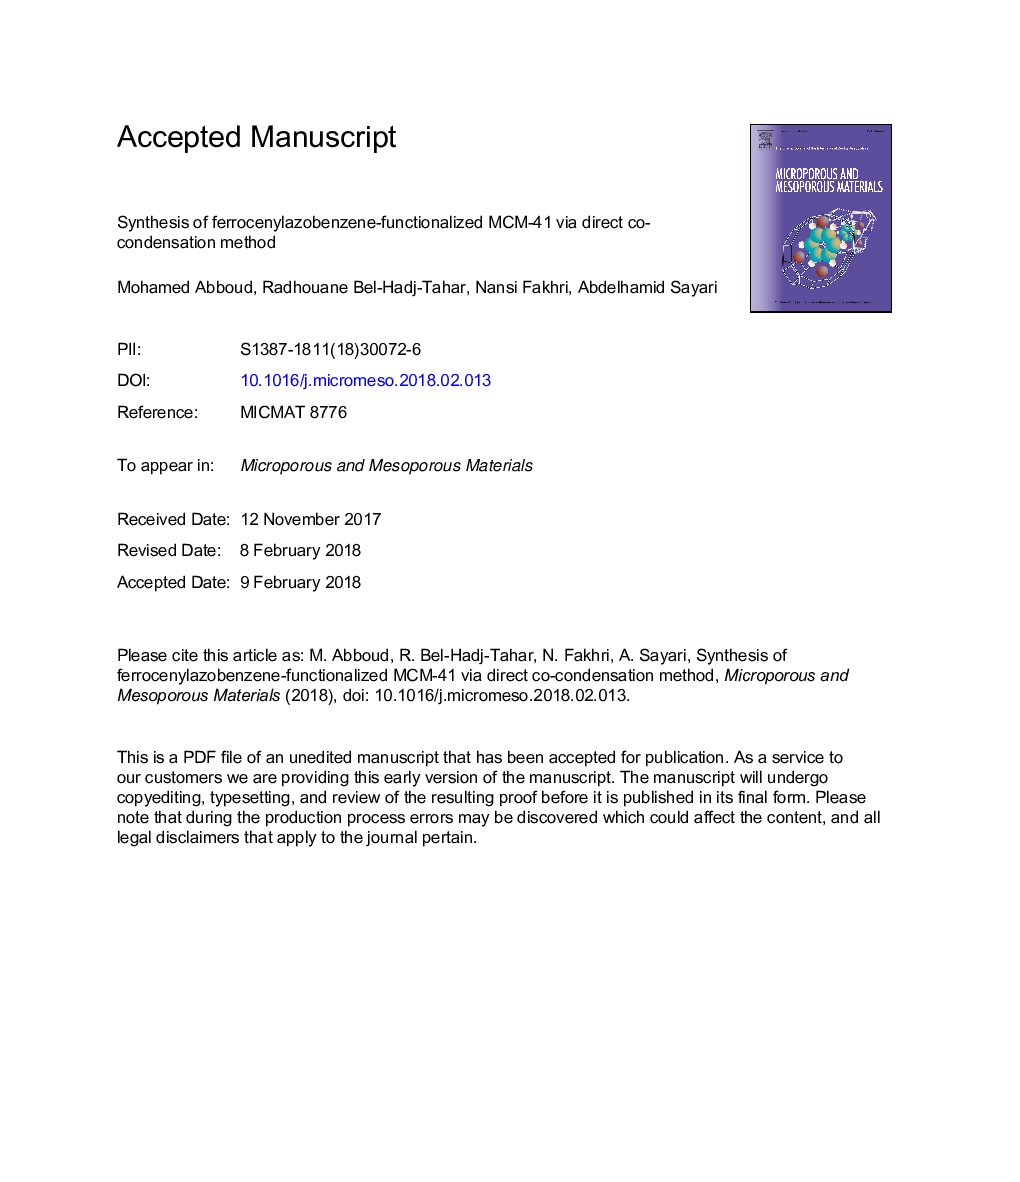 Synthesis of ferrocenylazobenzene-functionalized MCM-41 via direct co-condensation method